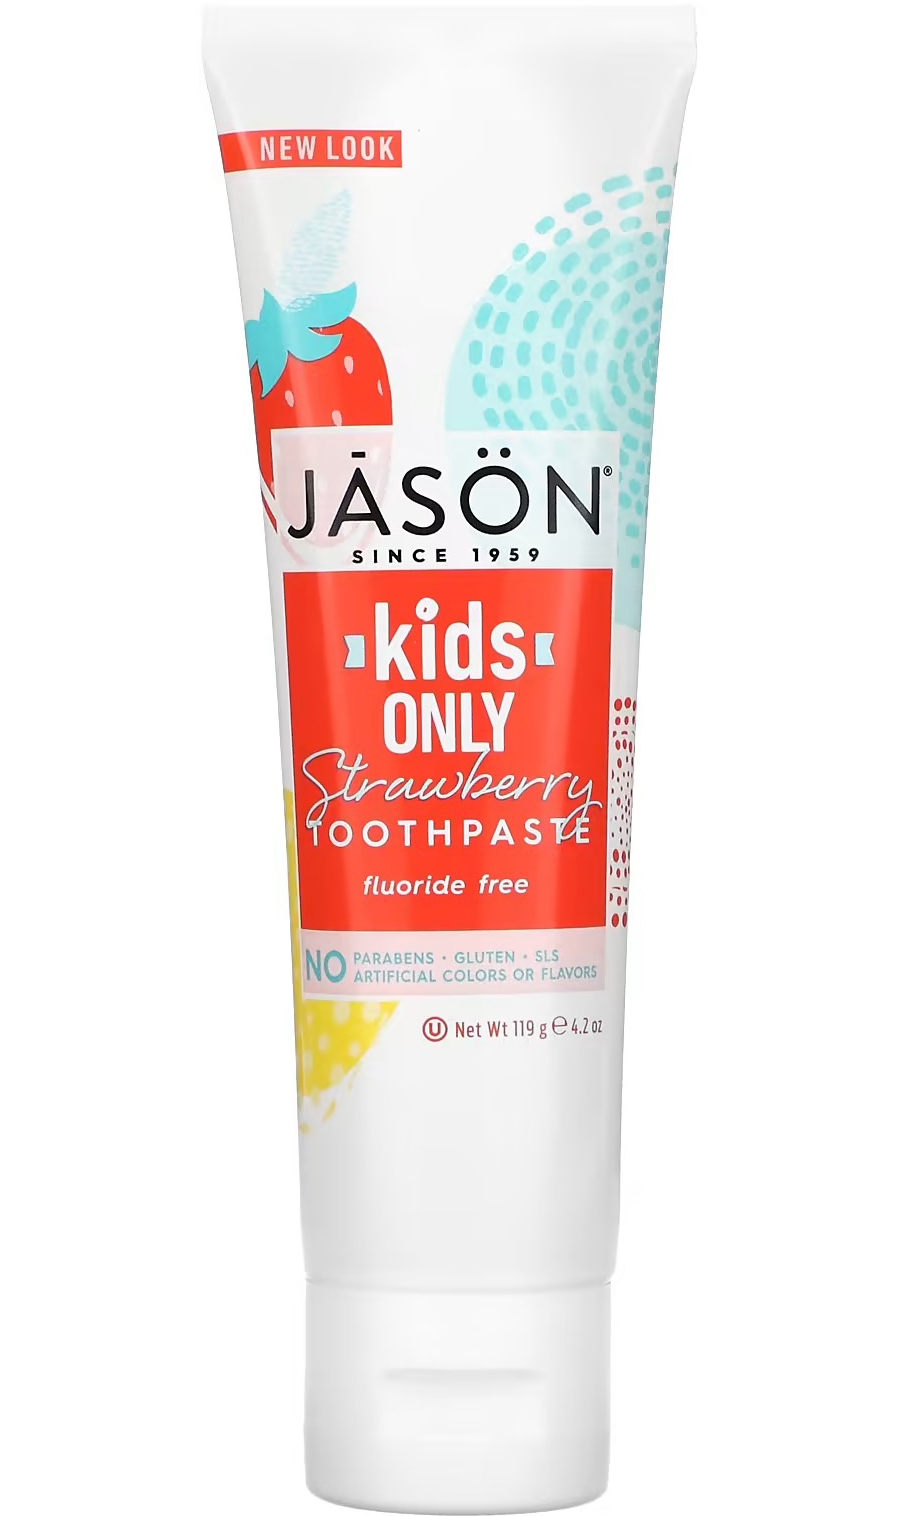 Детская зубная паста Jason Natural Kids Only с клубничным вкусом, 119 г book of hipster the hazeley jason